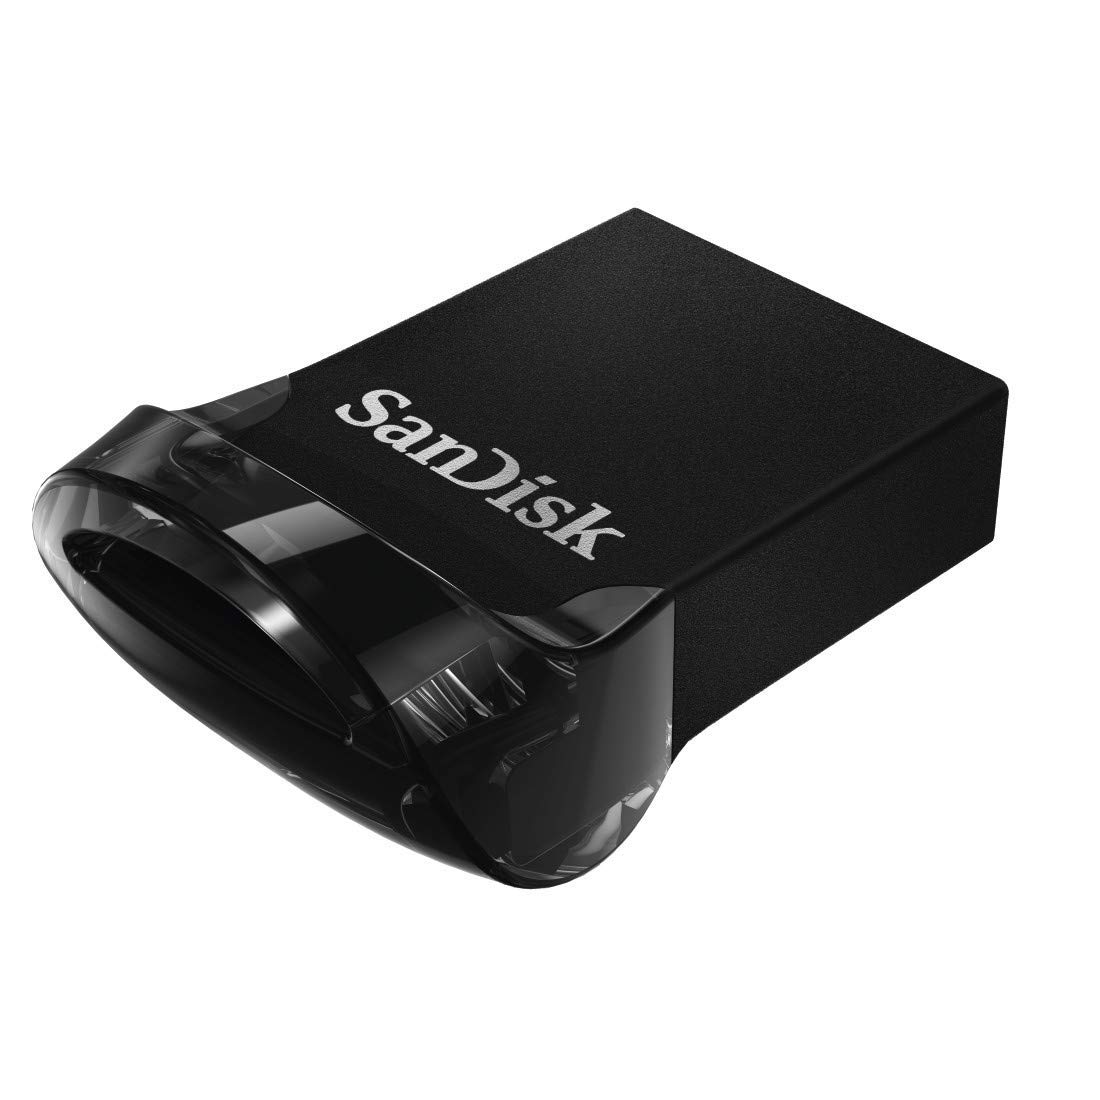 Memoria Flash USB 3.1 SanDisk de 128 GB Solo 19,3€